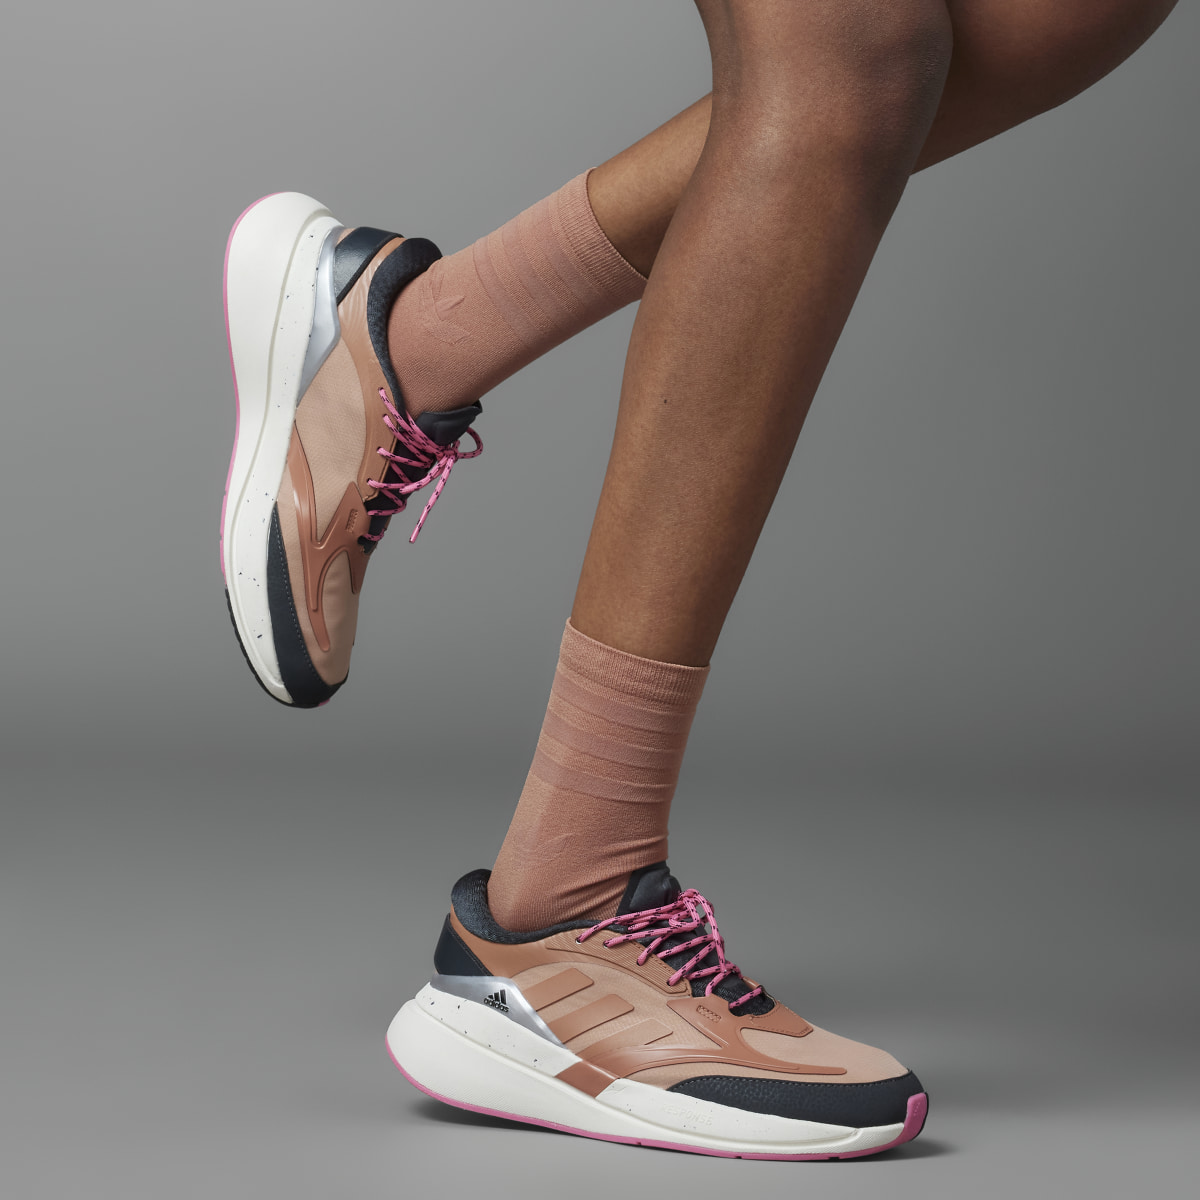 Adidas Collective Power Mid-Cut Bilekli Çorap - 3 Çift. 6